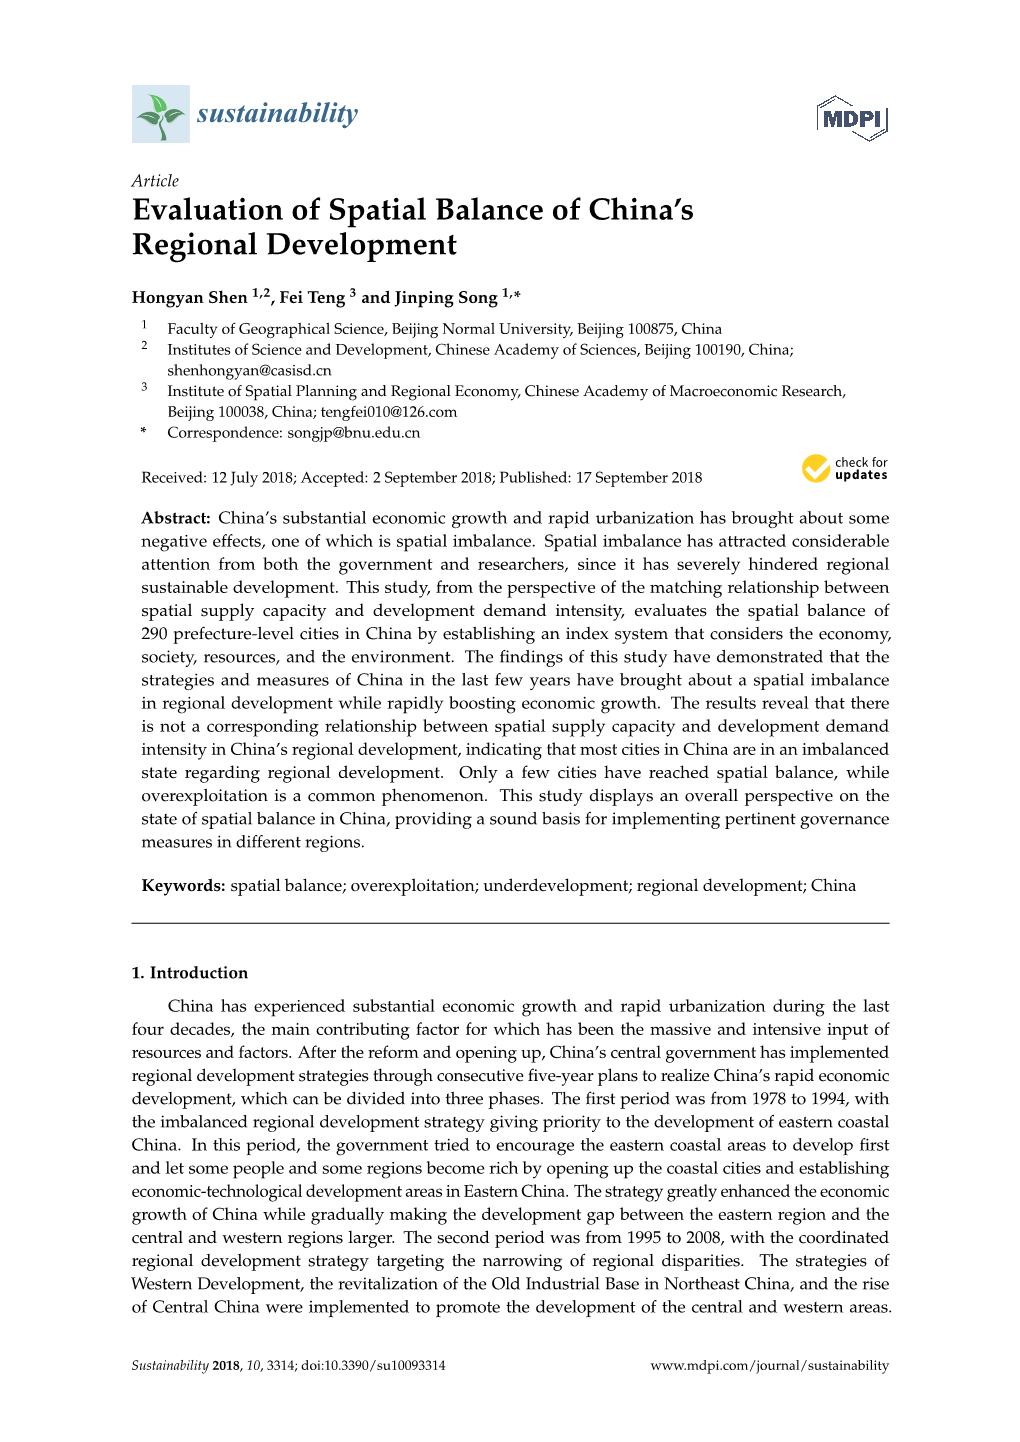 Evaluation of Spatial Balance of China's Regional Development